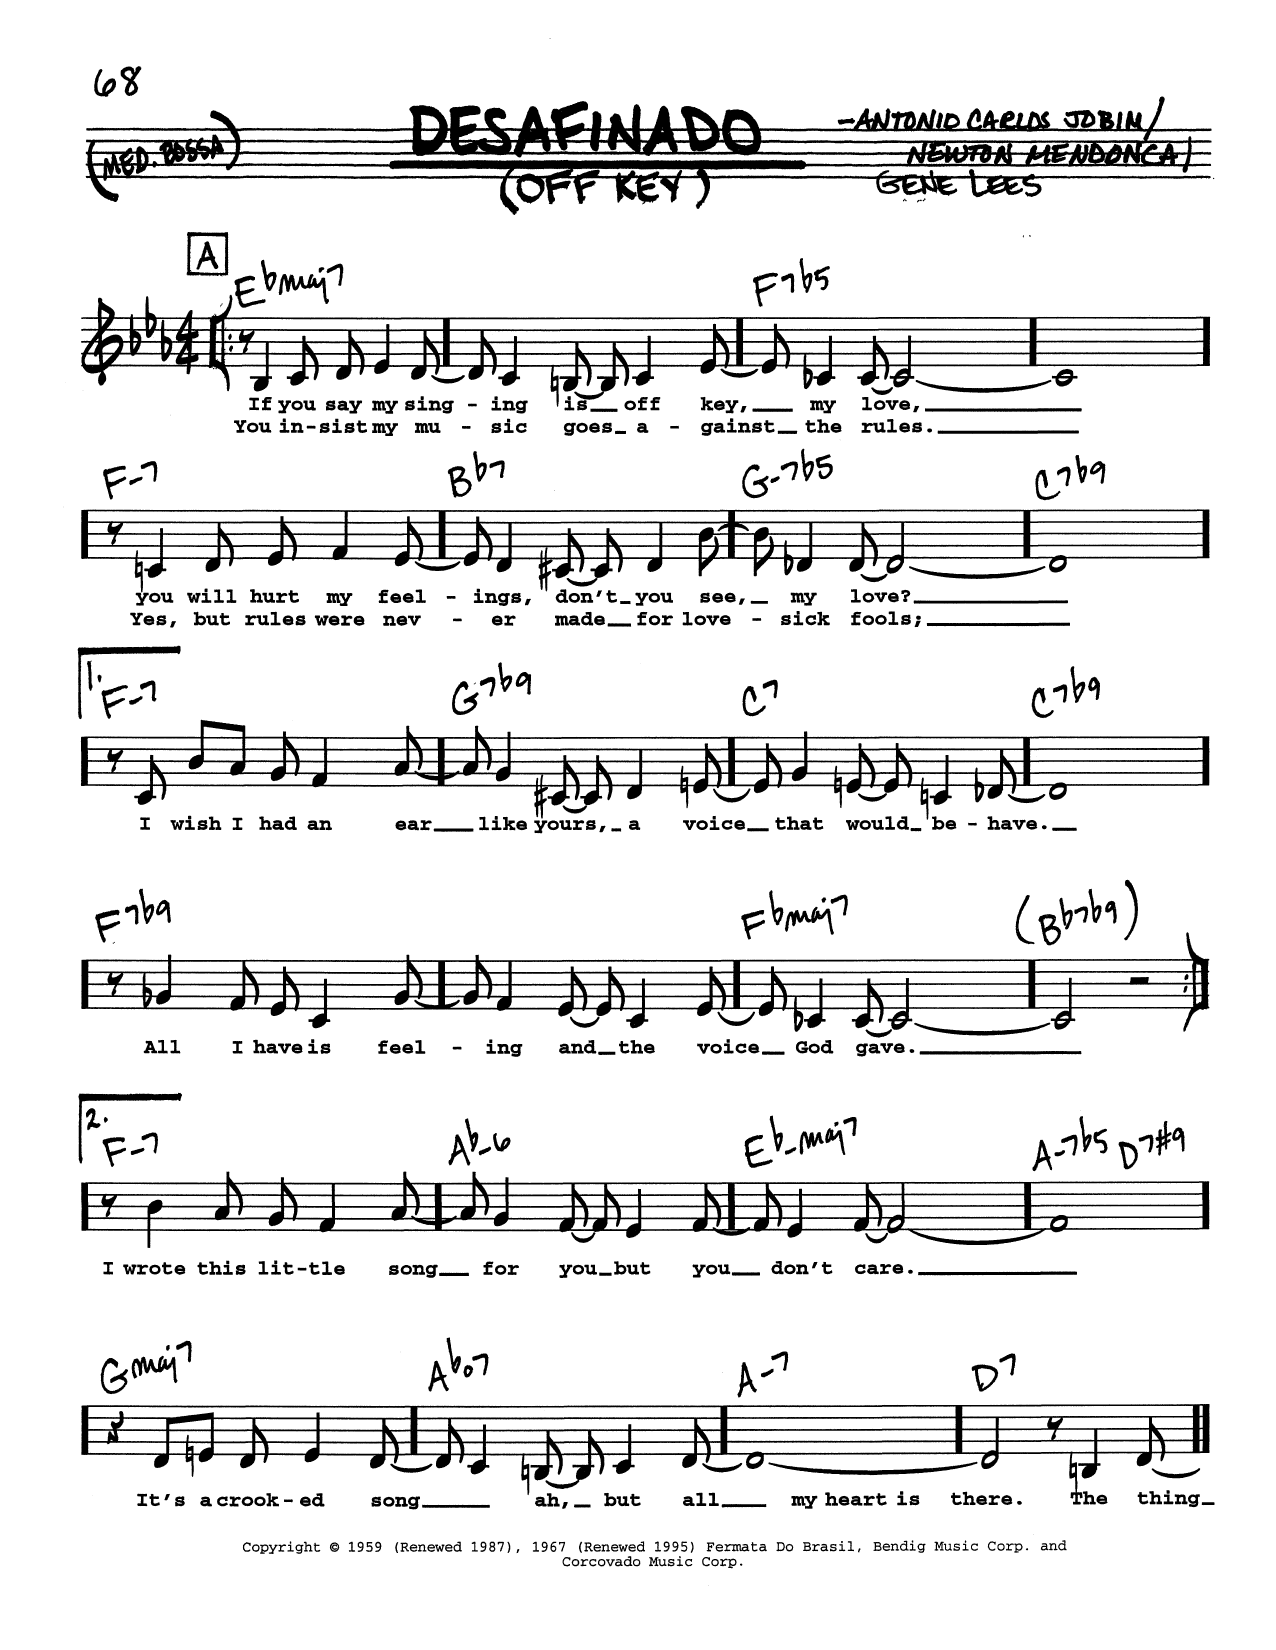 Antonio Carlos Jobim Desafinado (Off Key) (Low Voice) sheet music notes printable PDF score